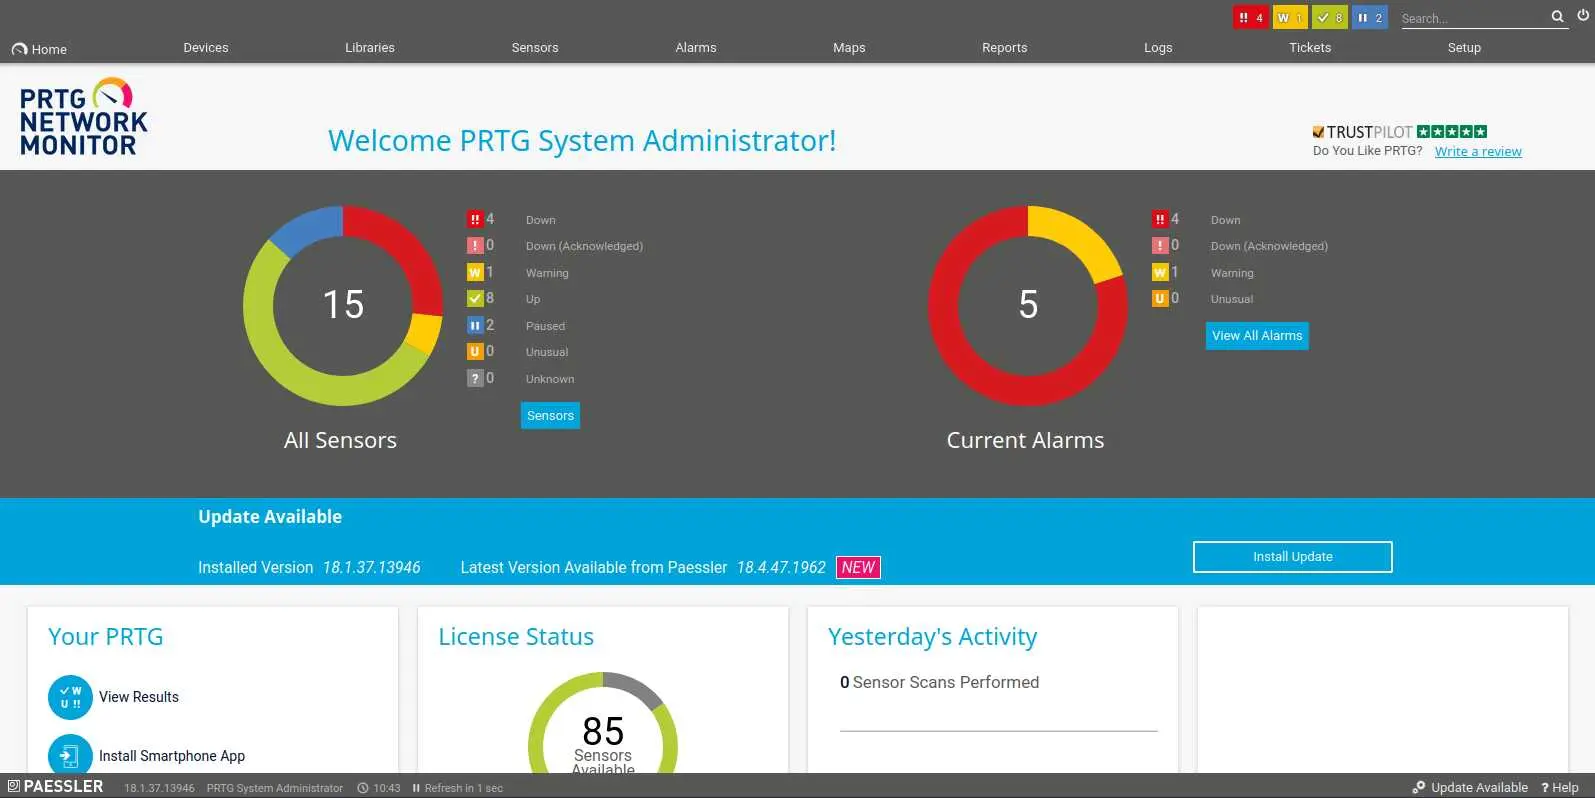 PRTG Network Monitor panel